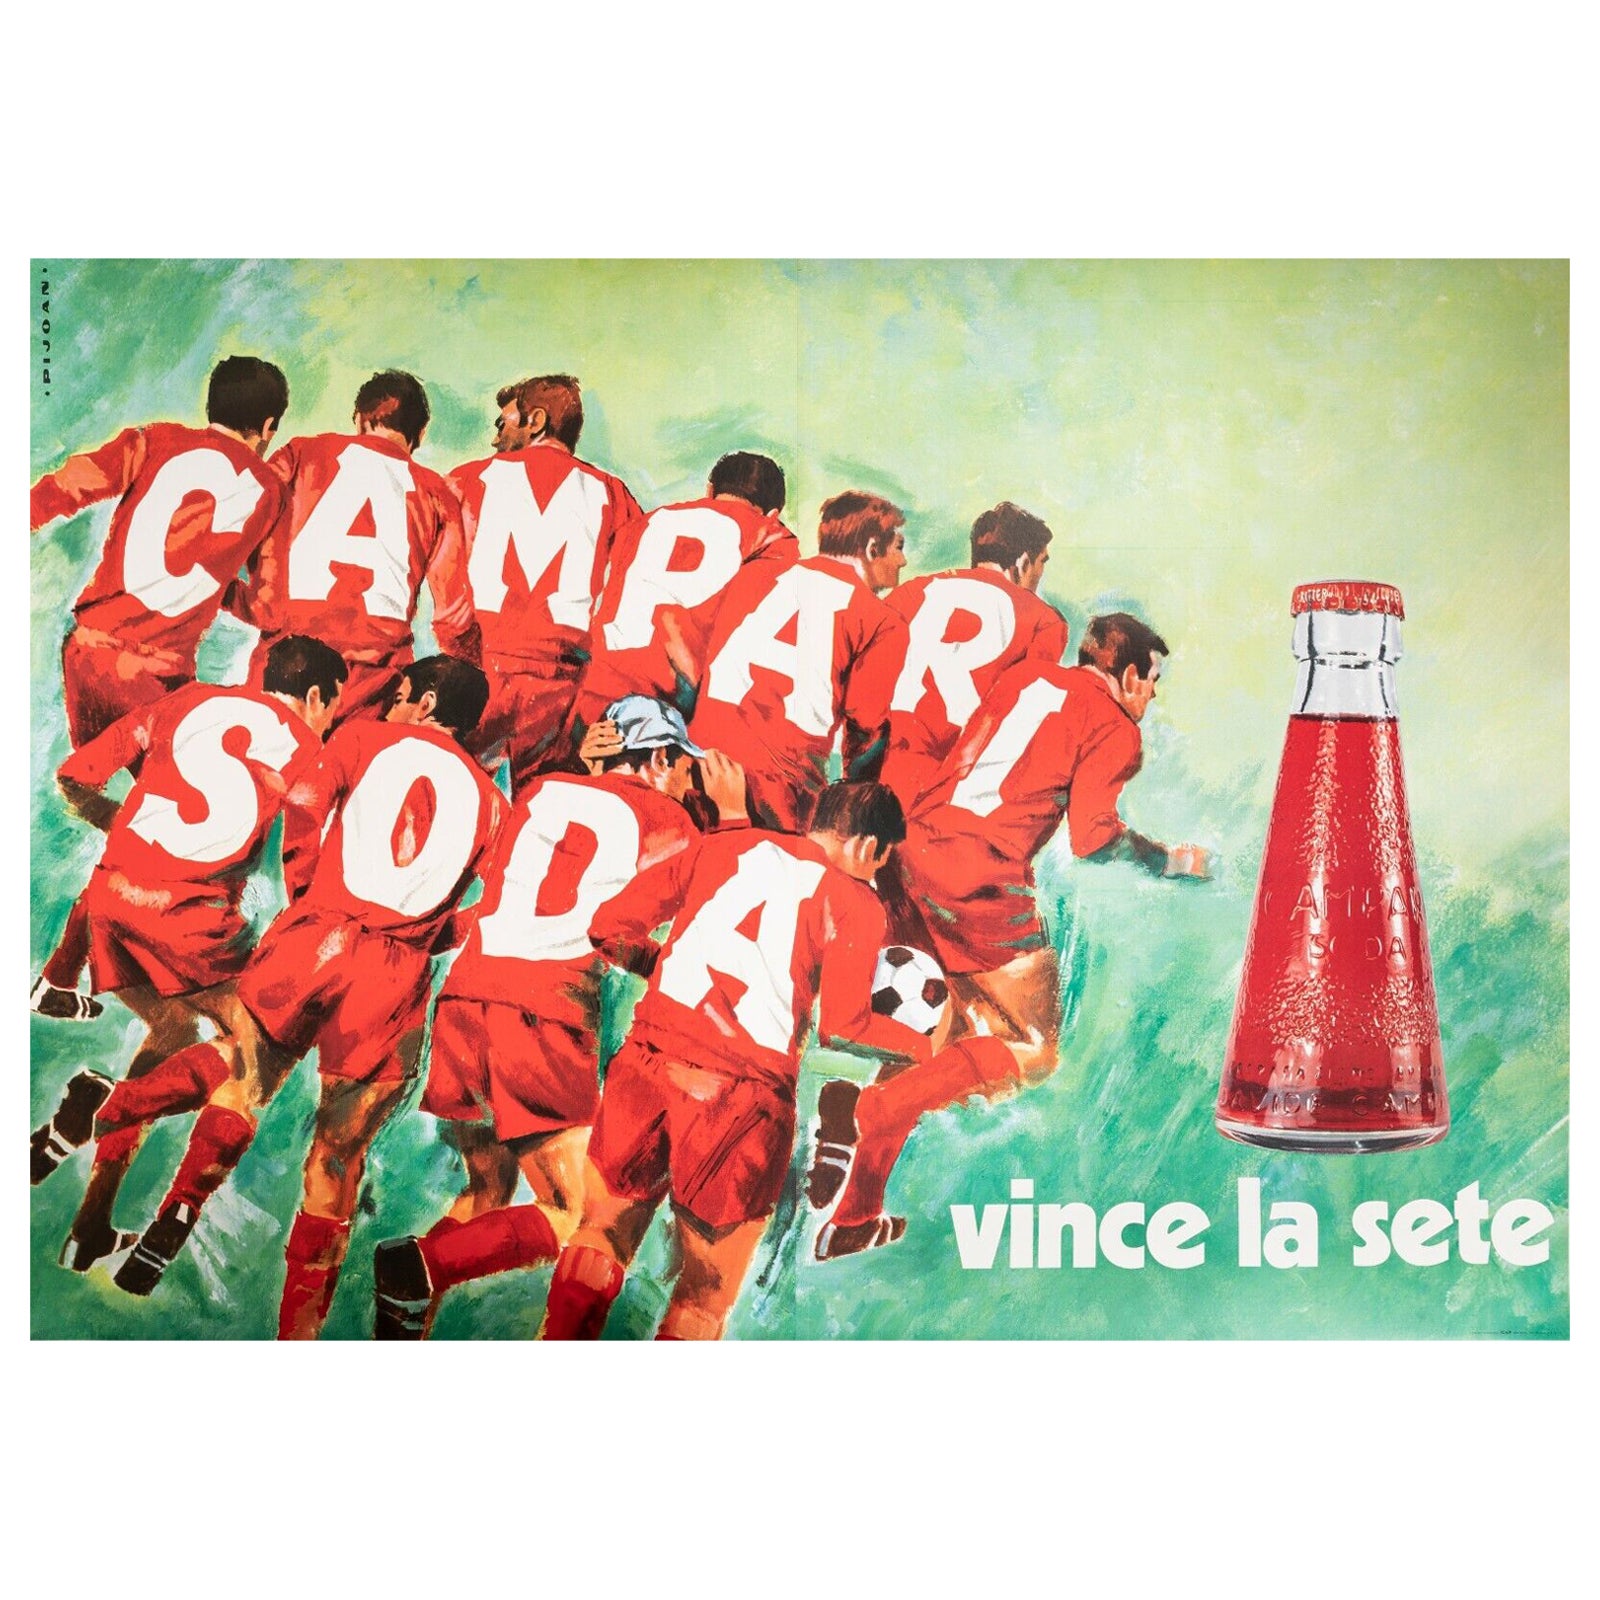 Original-Vintage-Poster-Pijoan-Campari Soda-Soccer-Liqueur, ca. 1970